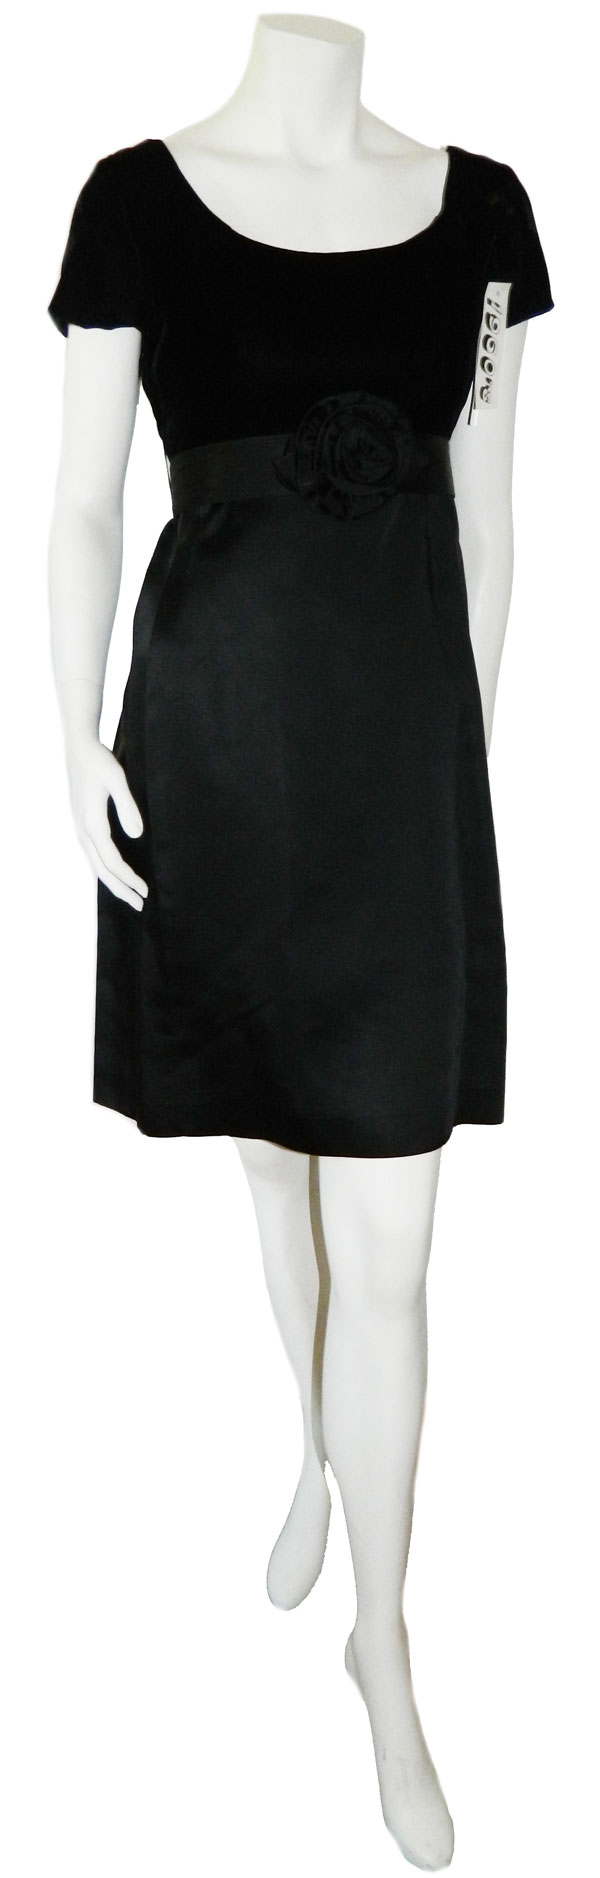 Vintage black party dress1950's black cocktail dress